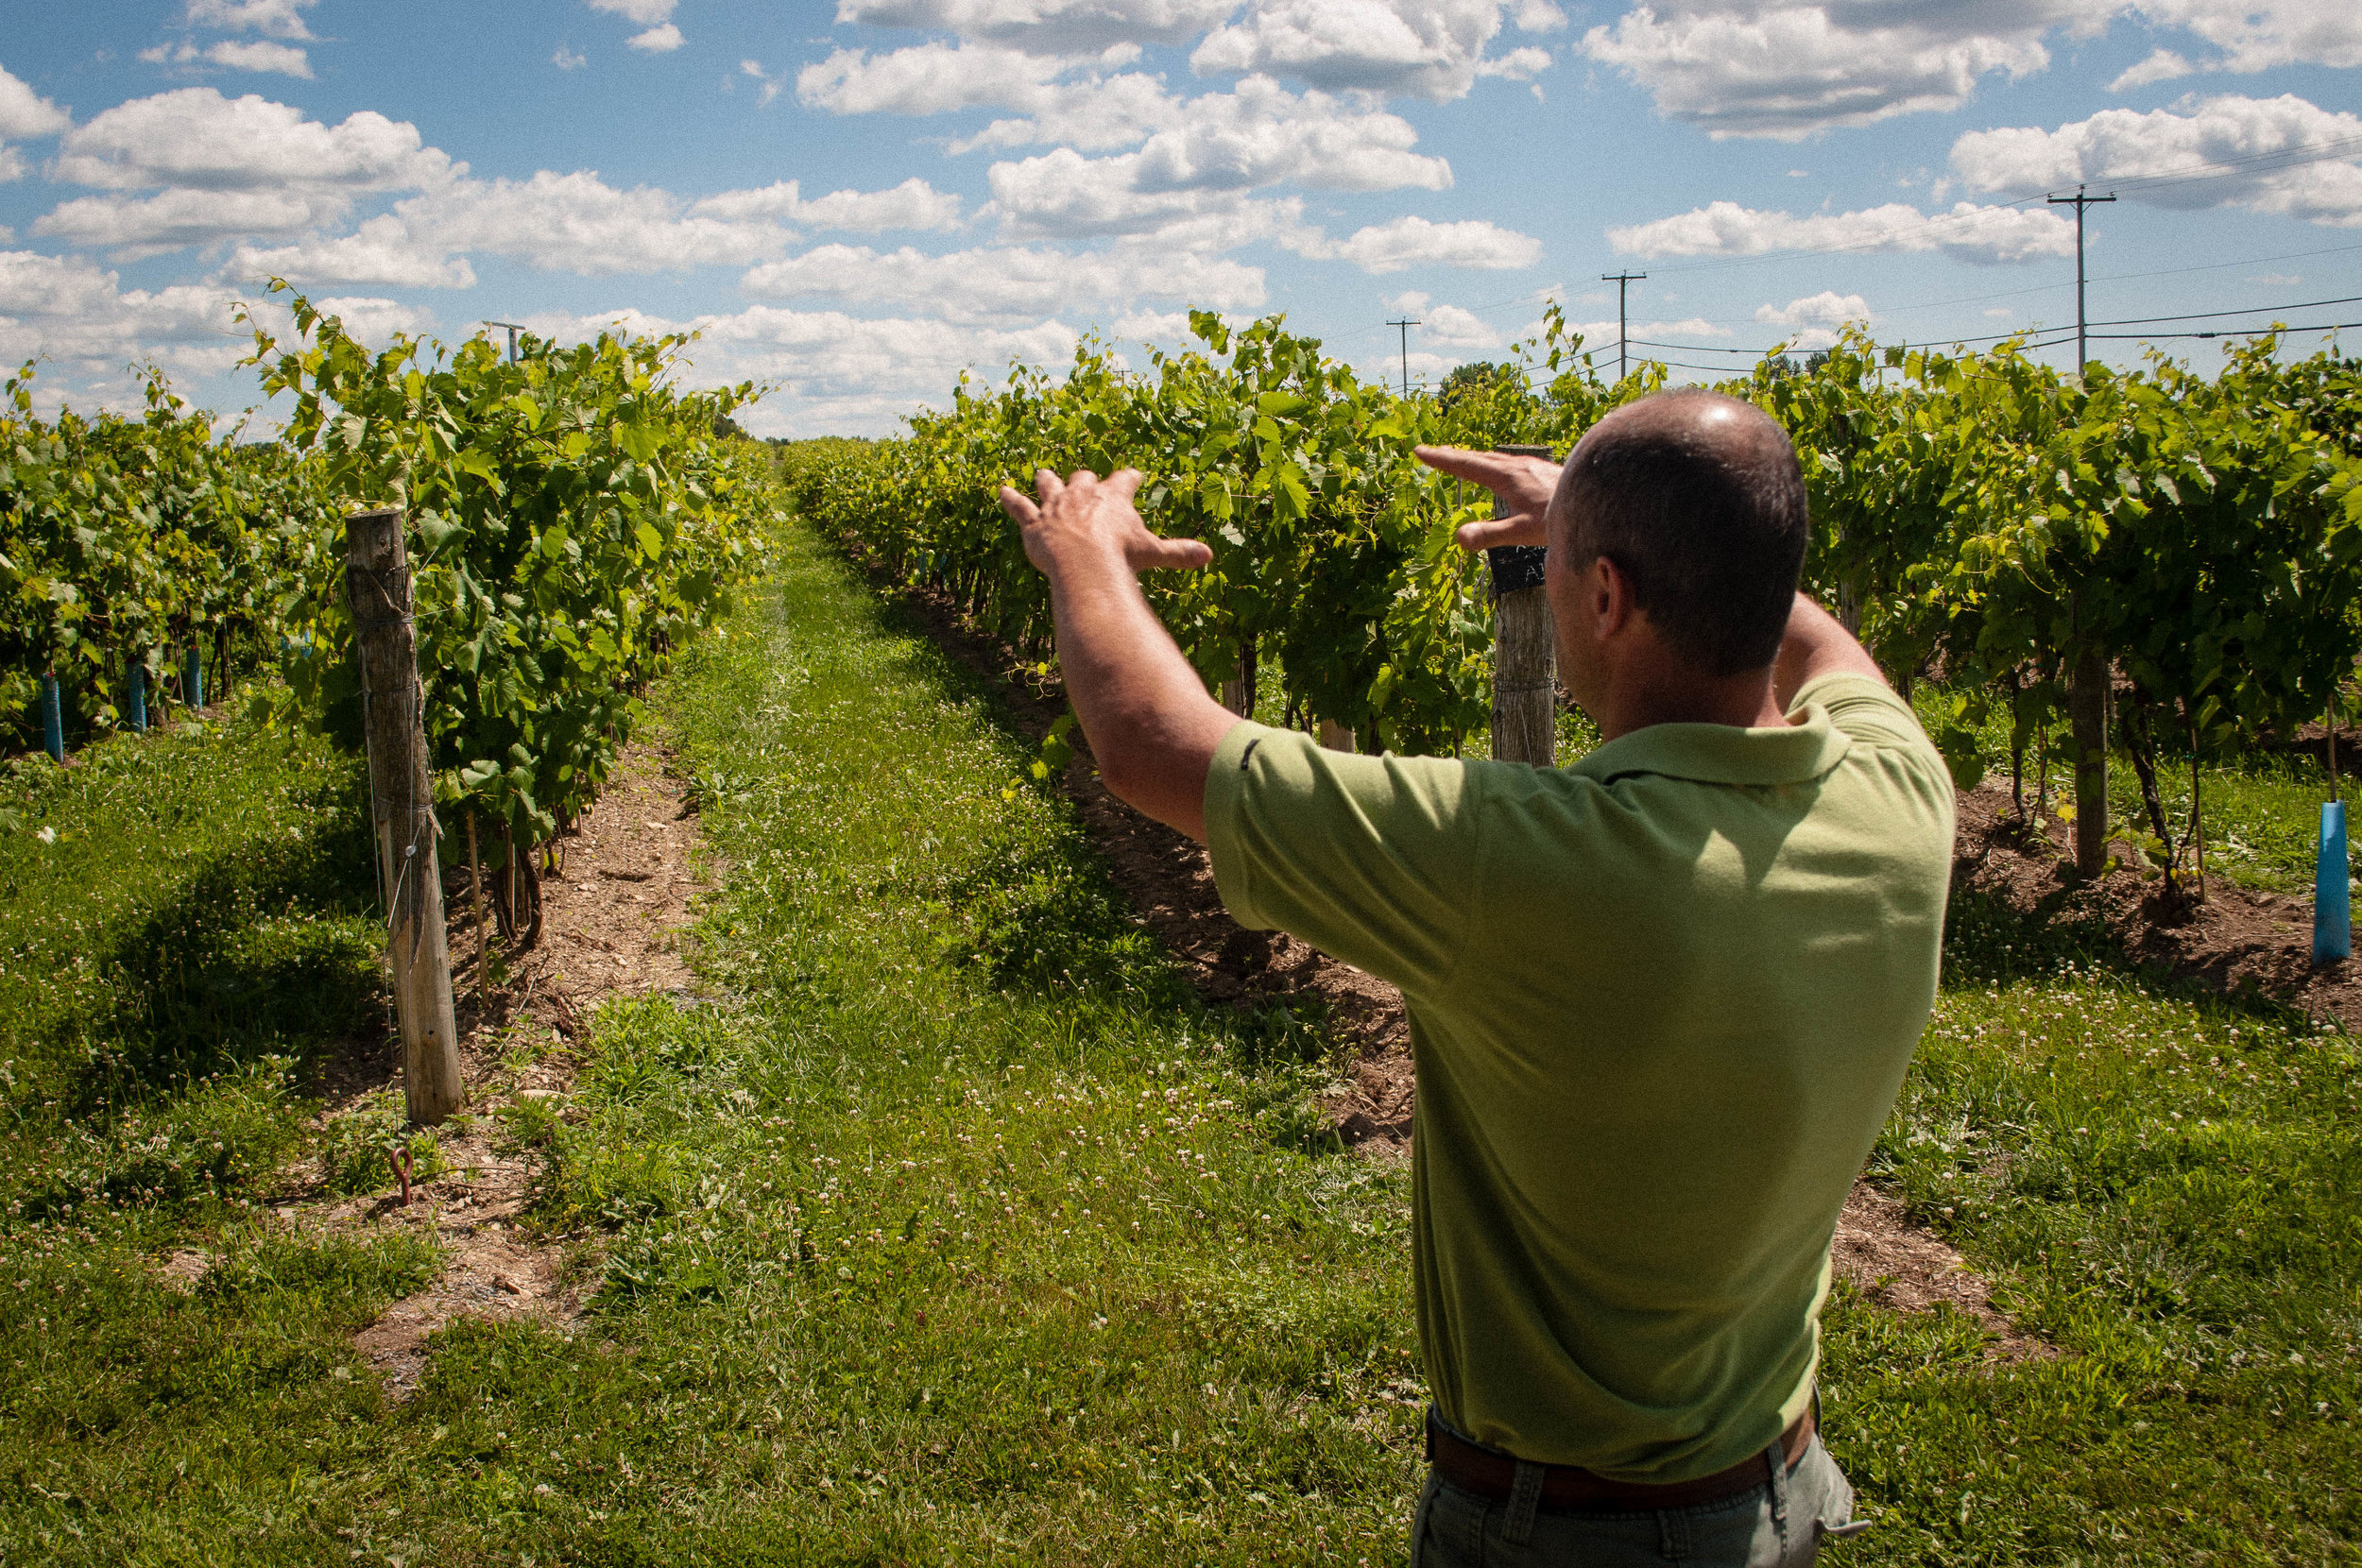 Vignoble La Bauge, a vineyard near Montreal